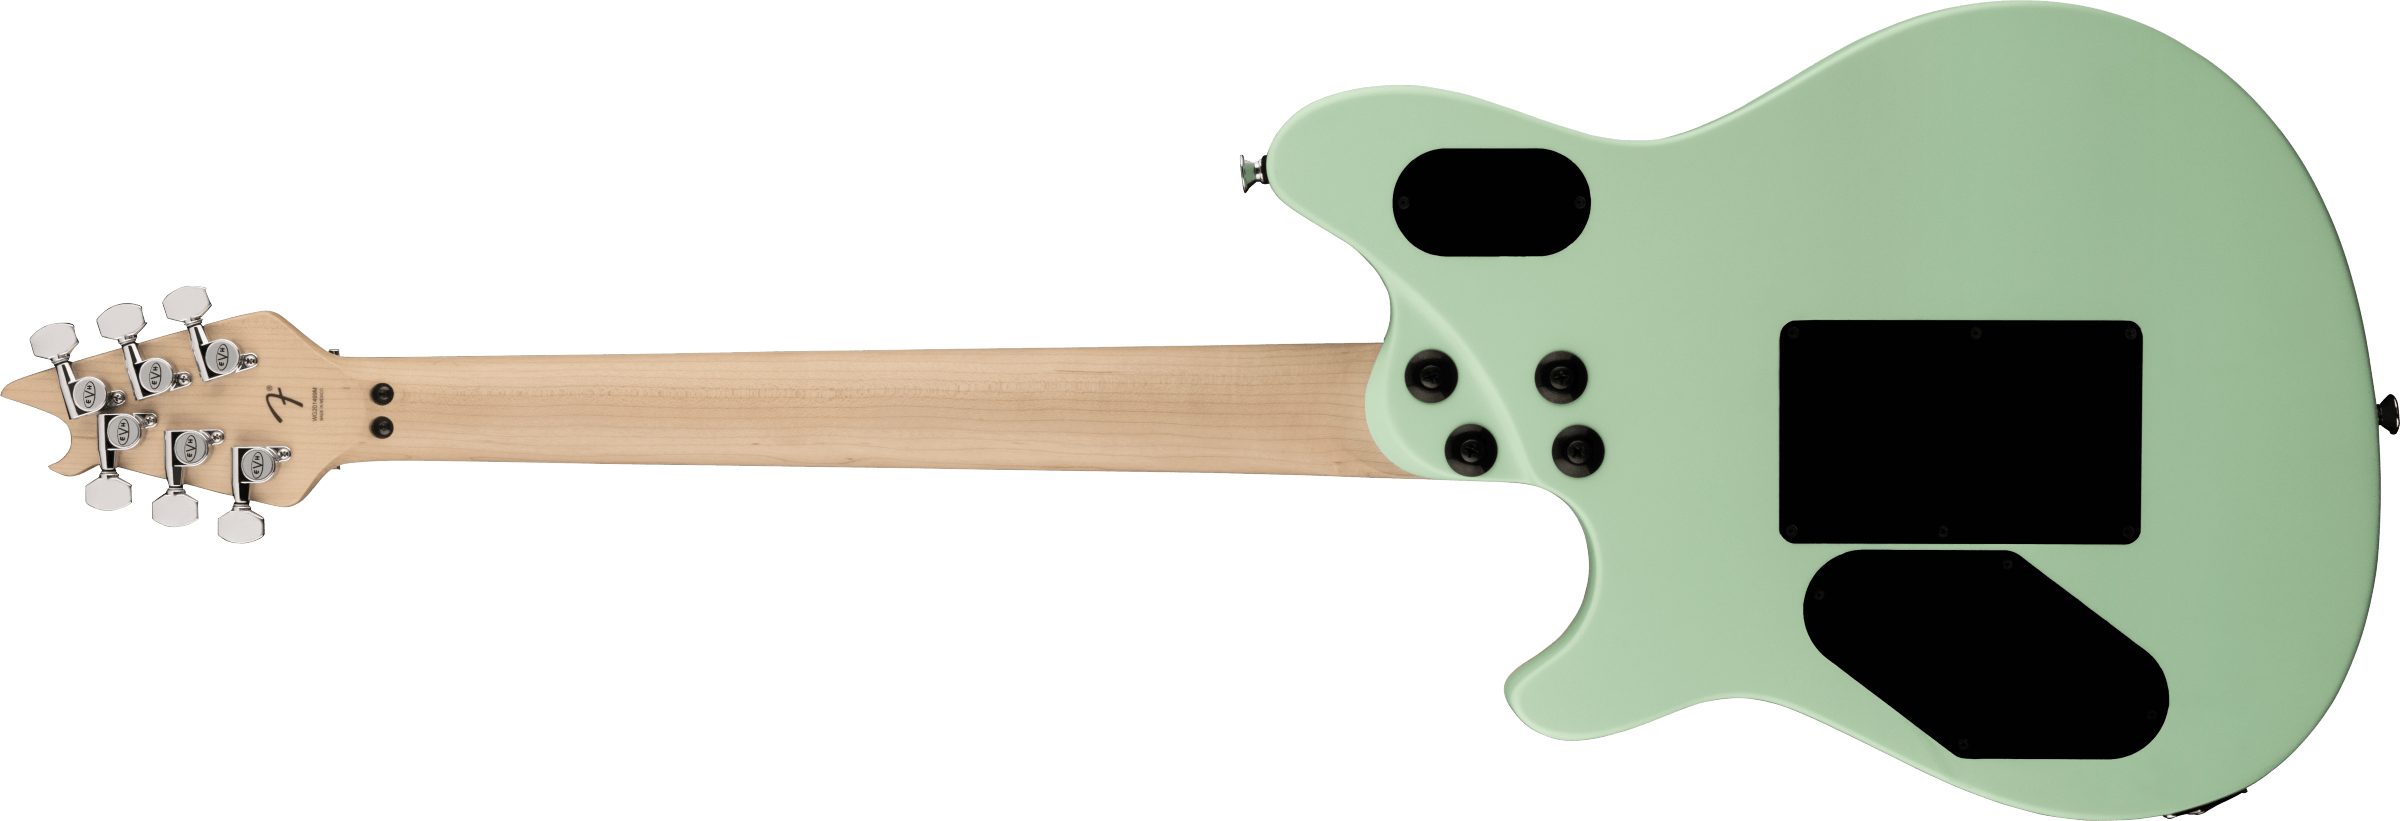 EVH Wolfgang Special Maple Fingerboard, Satin Surf Green 5107701557 SERIAL NUMBER WG220453M - 7.6 LBS